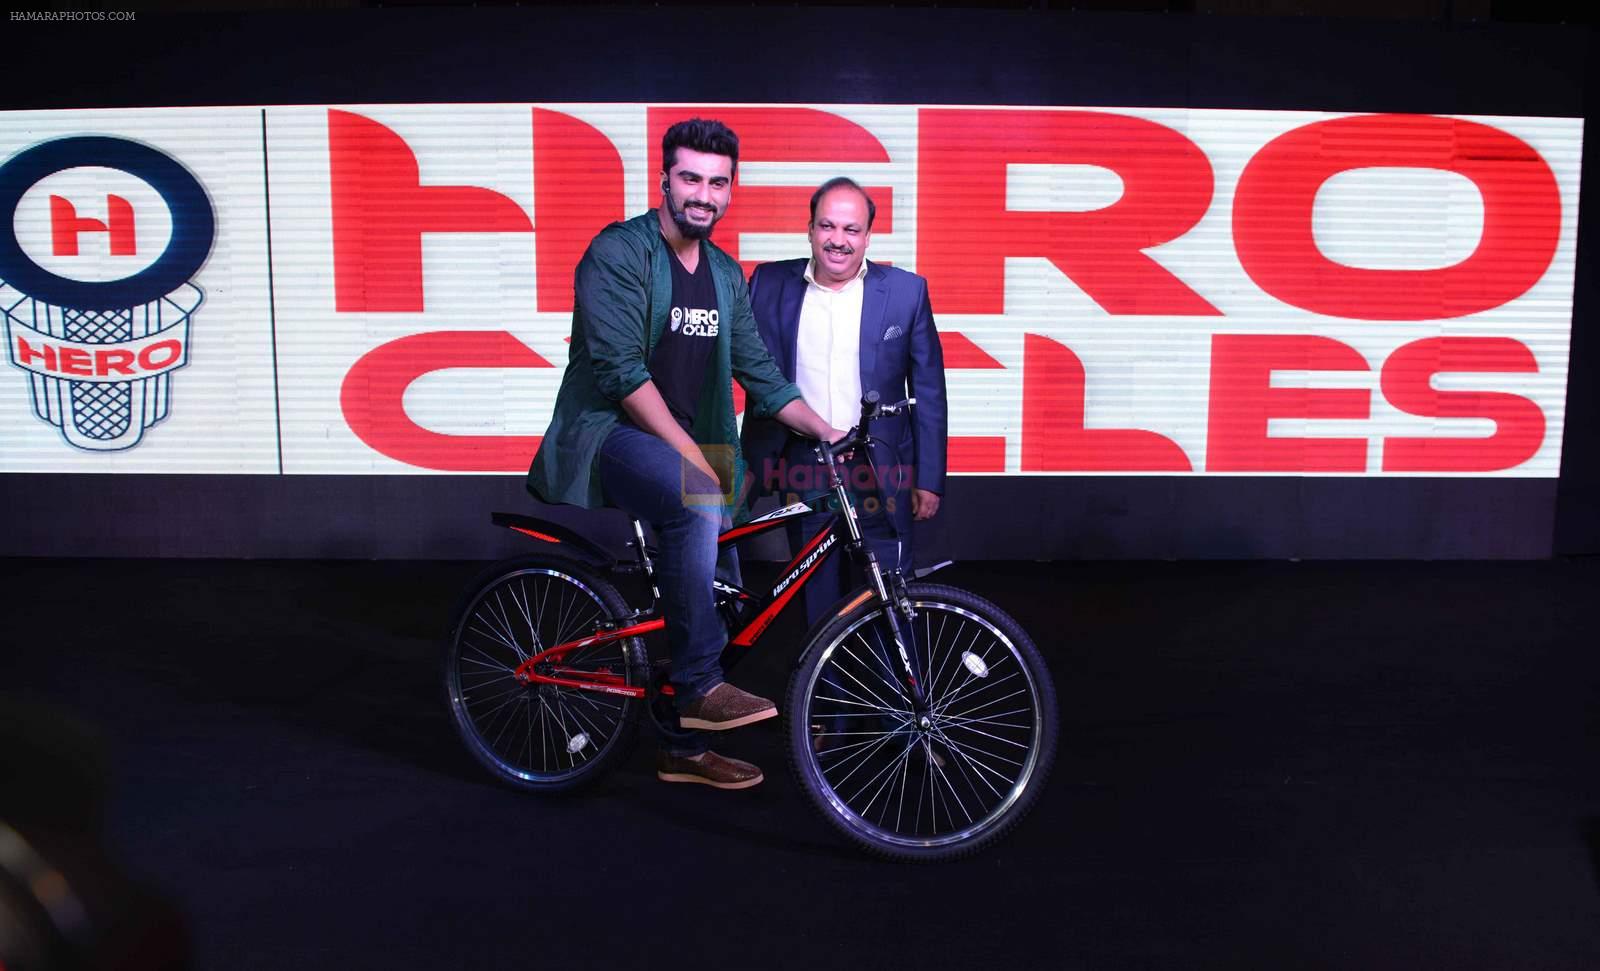 Arjun Kapoor promotes hero cycles in delhi on 30th June 2015